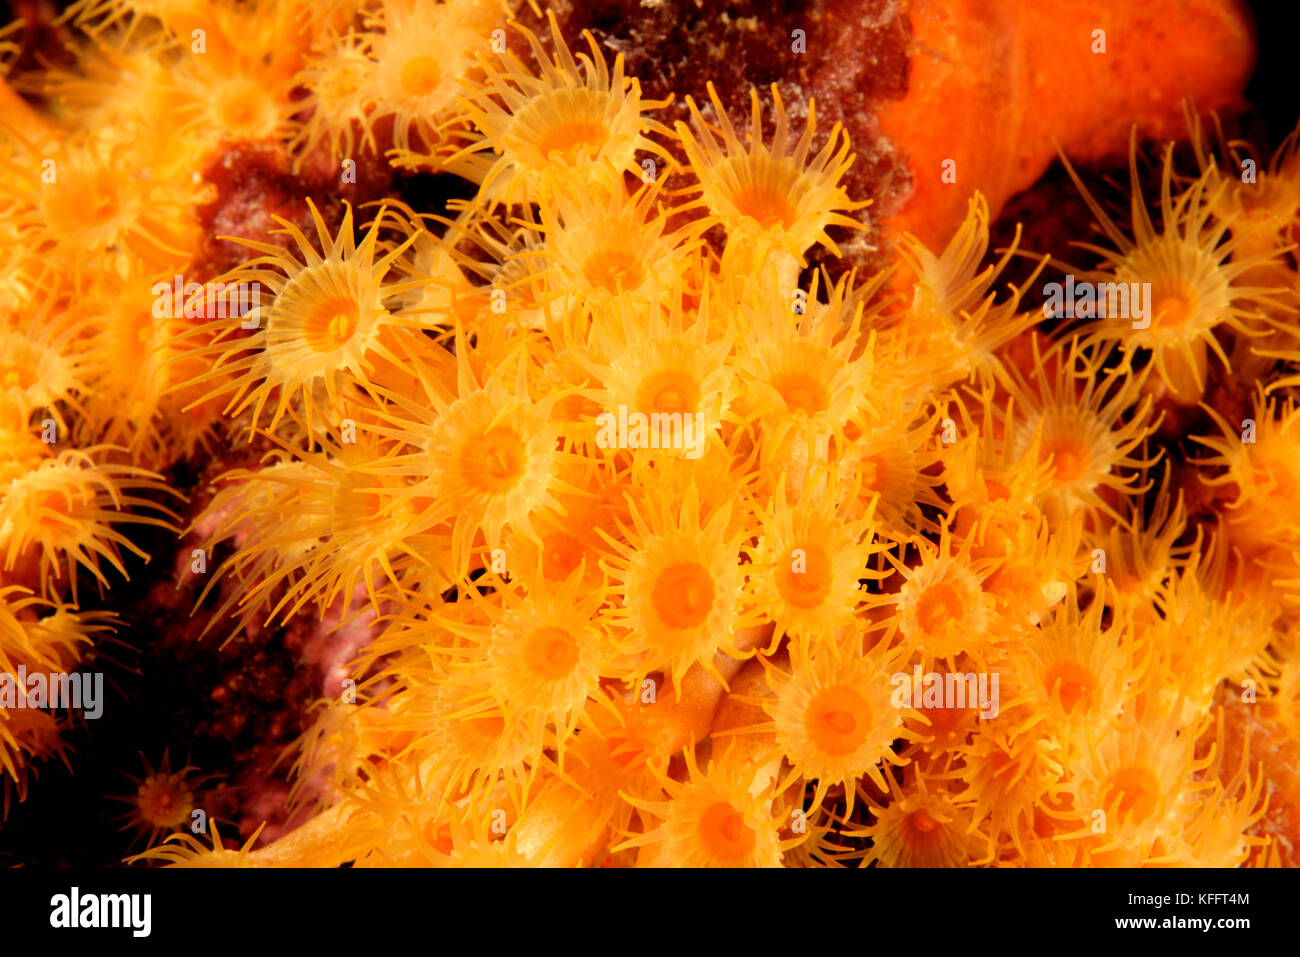 Yellow Encrusting Anemone, Parazoanthus axinellae, Adriatic Sea, Mediterranean Sea, Kornati Islands, Croatia Stock Photo